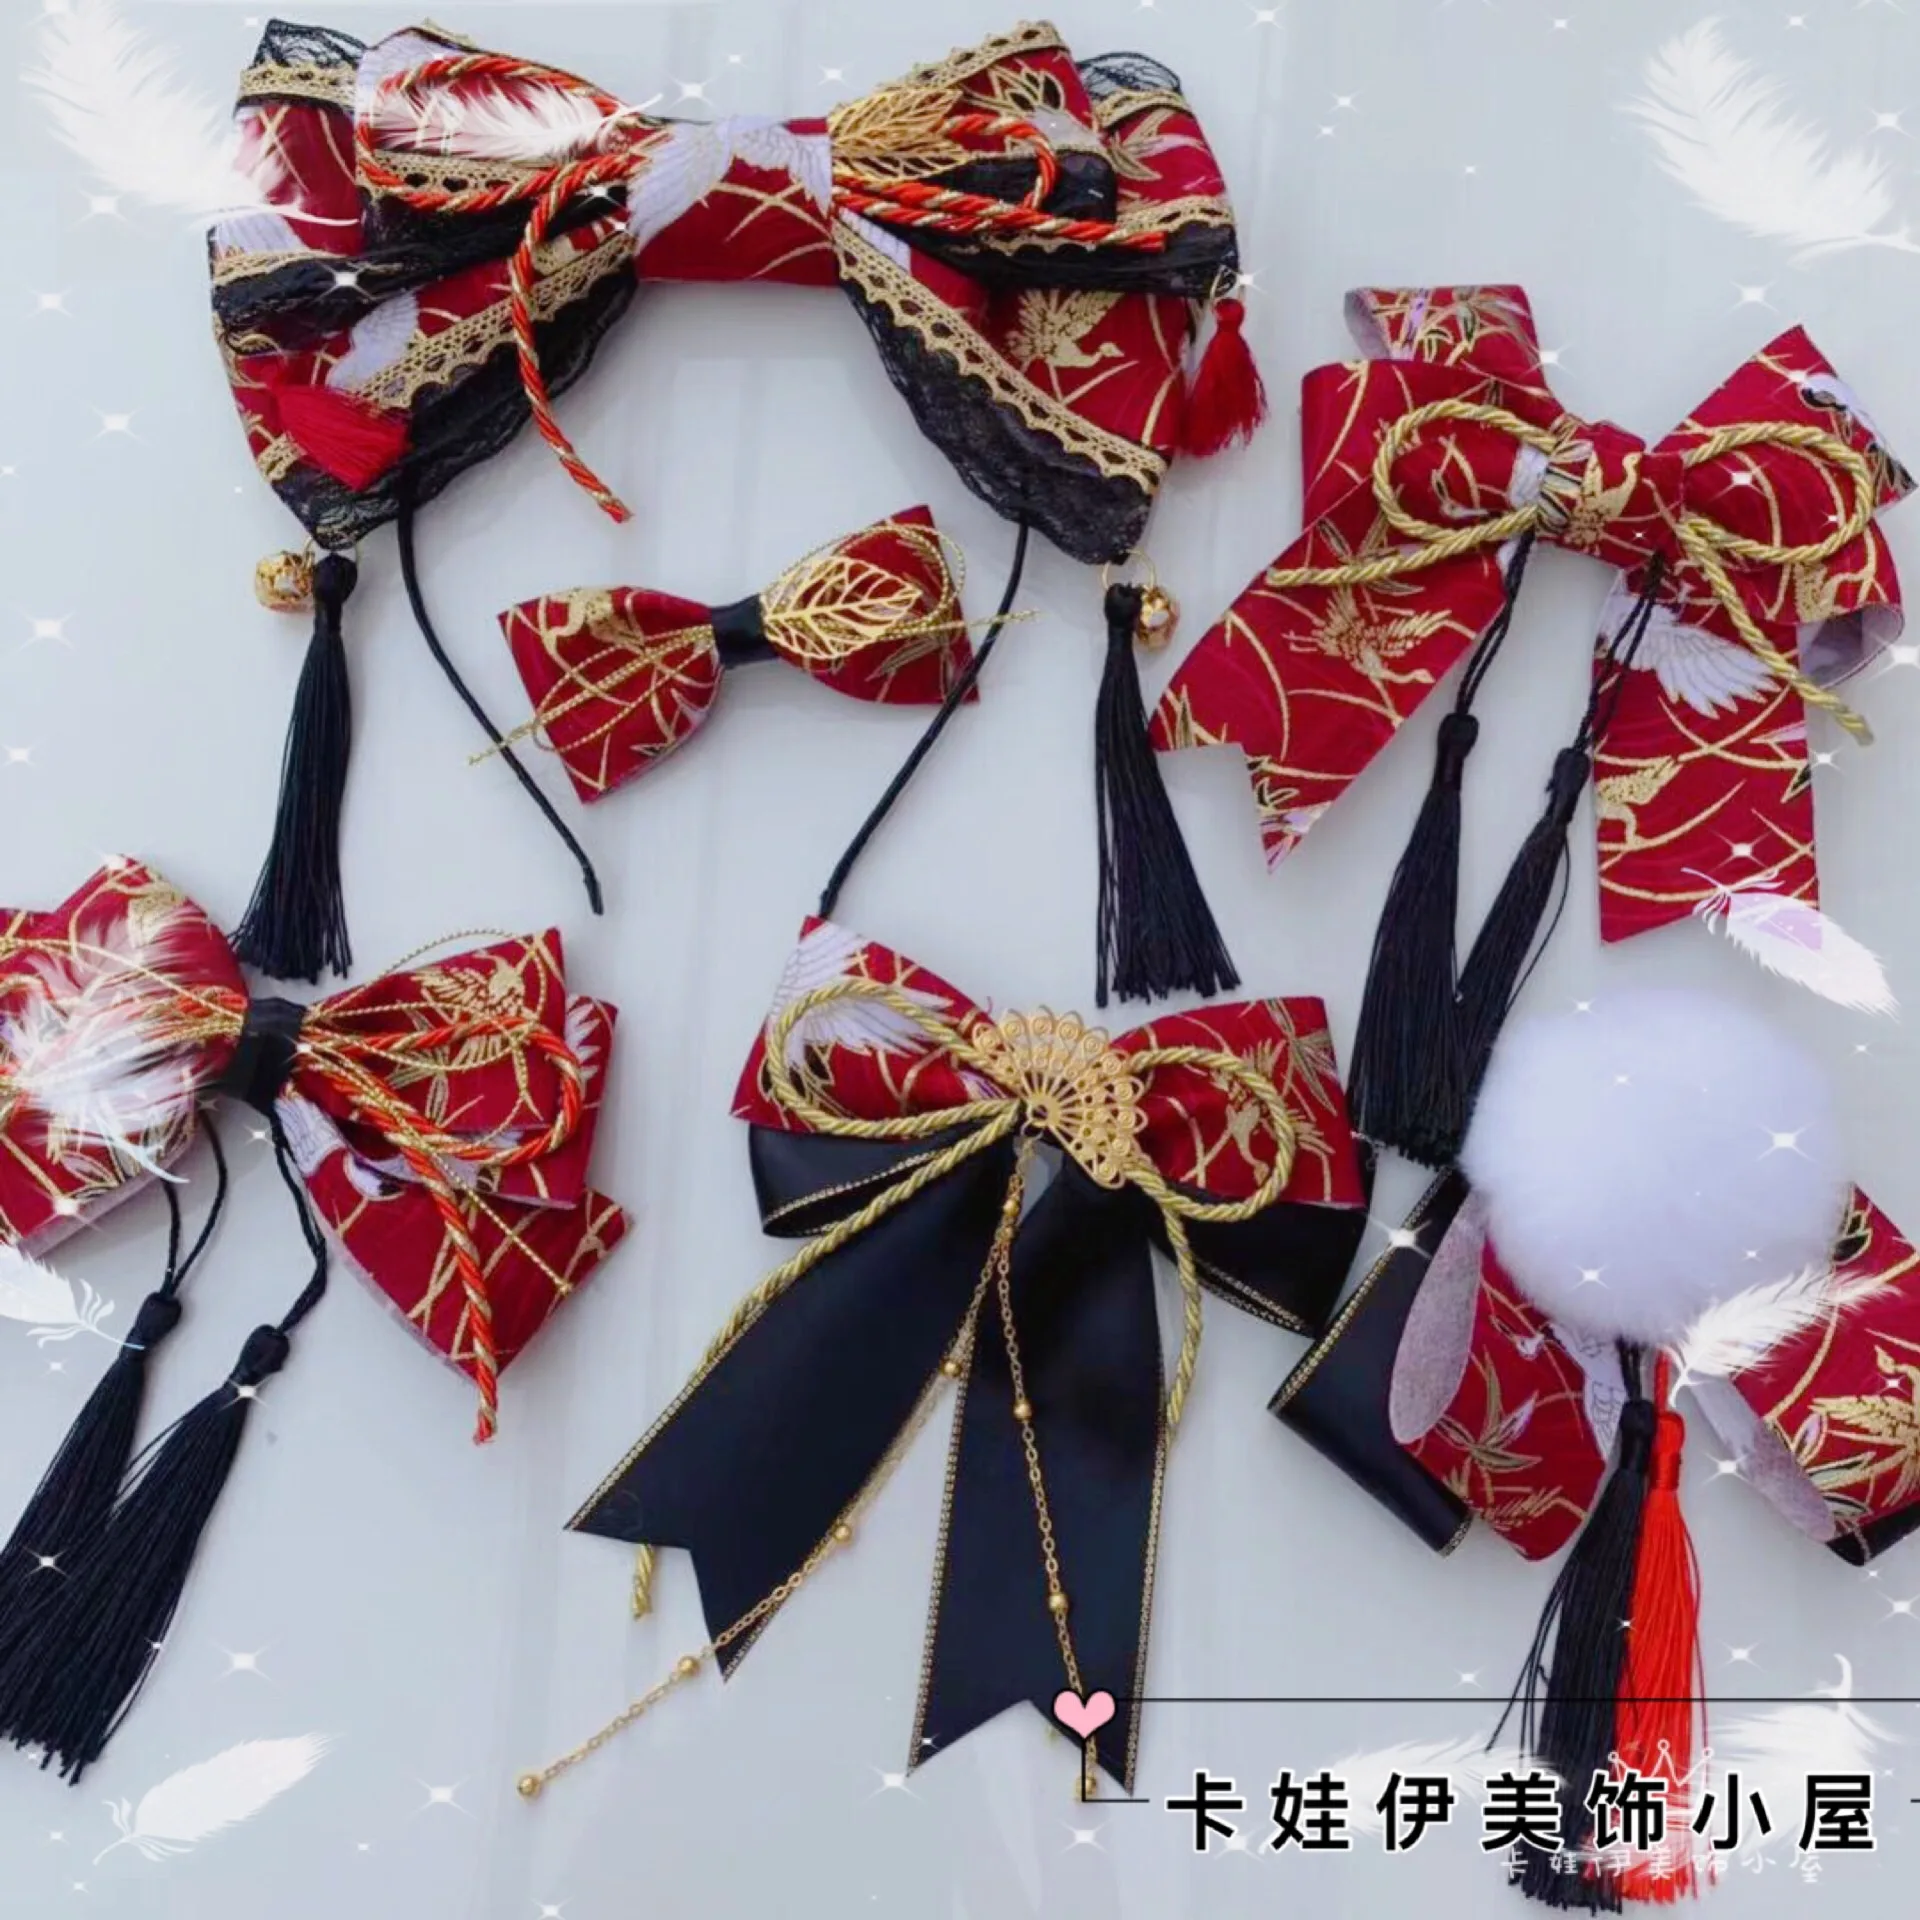 

Soft Sister Lolita Cosplay Kimono bathrobe Tassels Black Red Bow Headband KC Hairpin Hairpin Side Clip With Crane Back Ornament